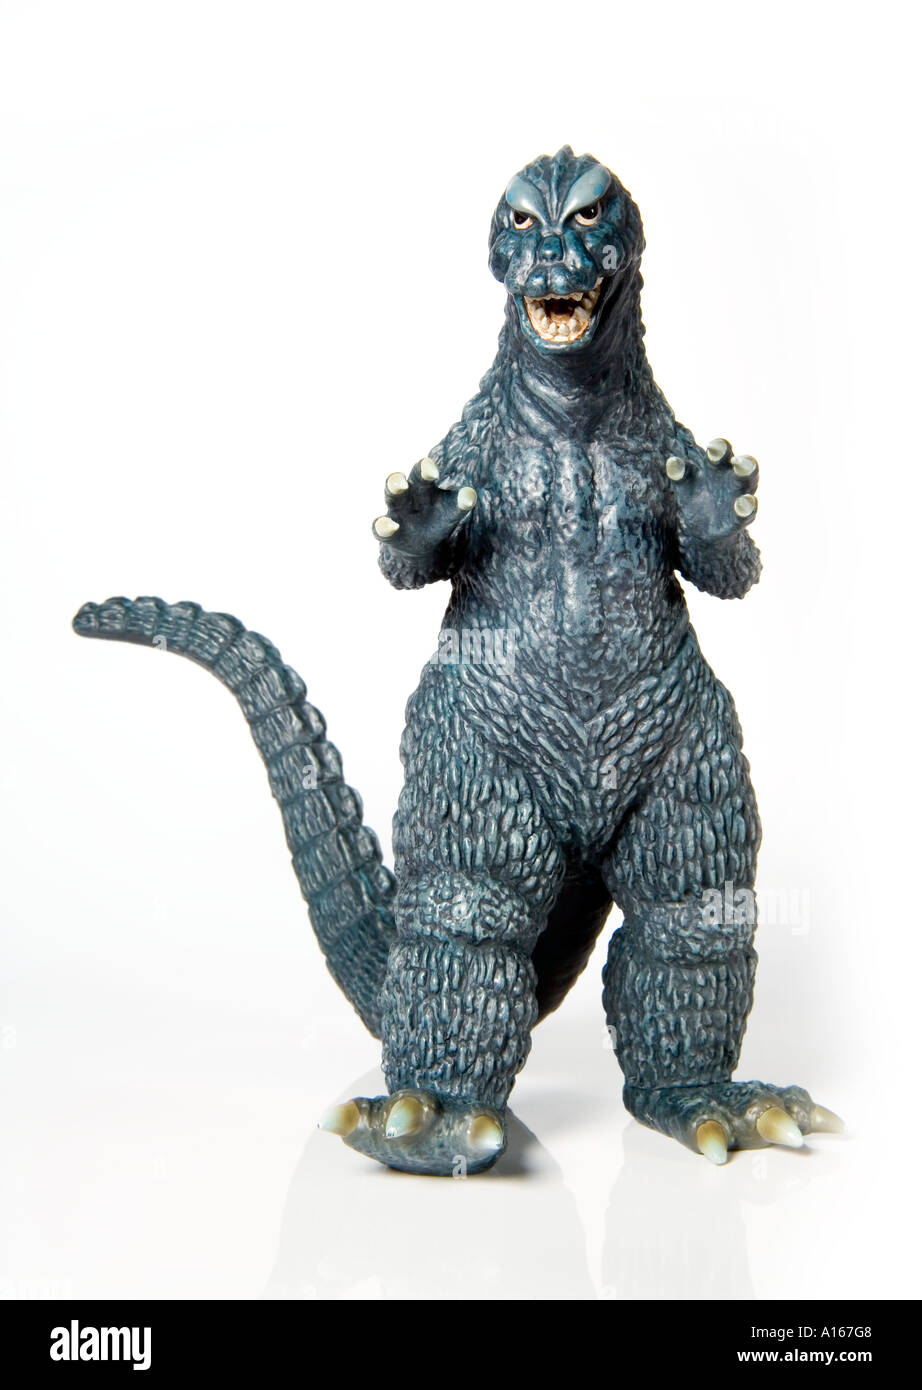 Godzilla Toy Stock Photo